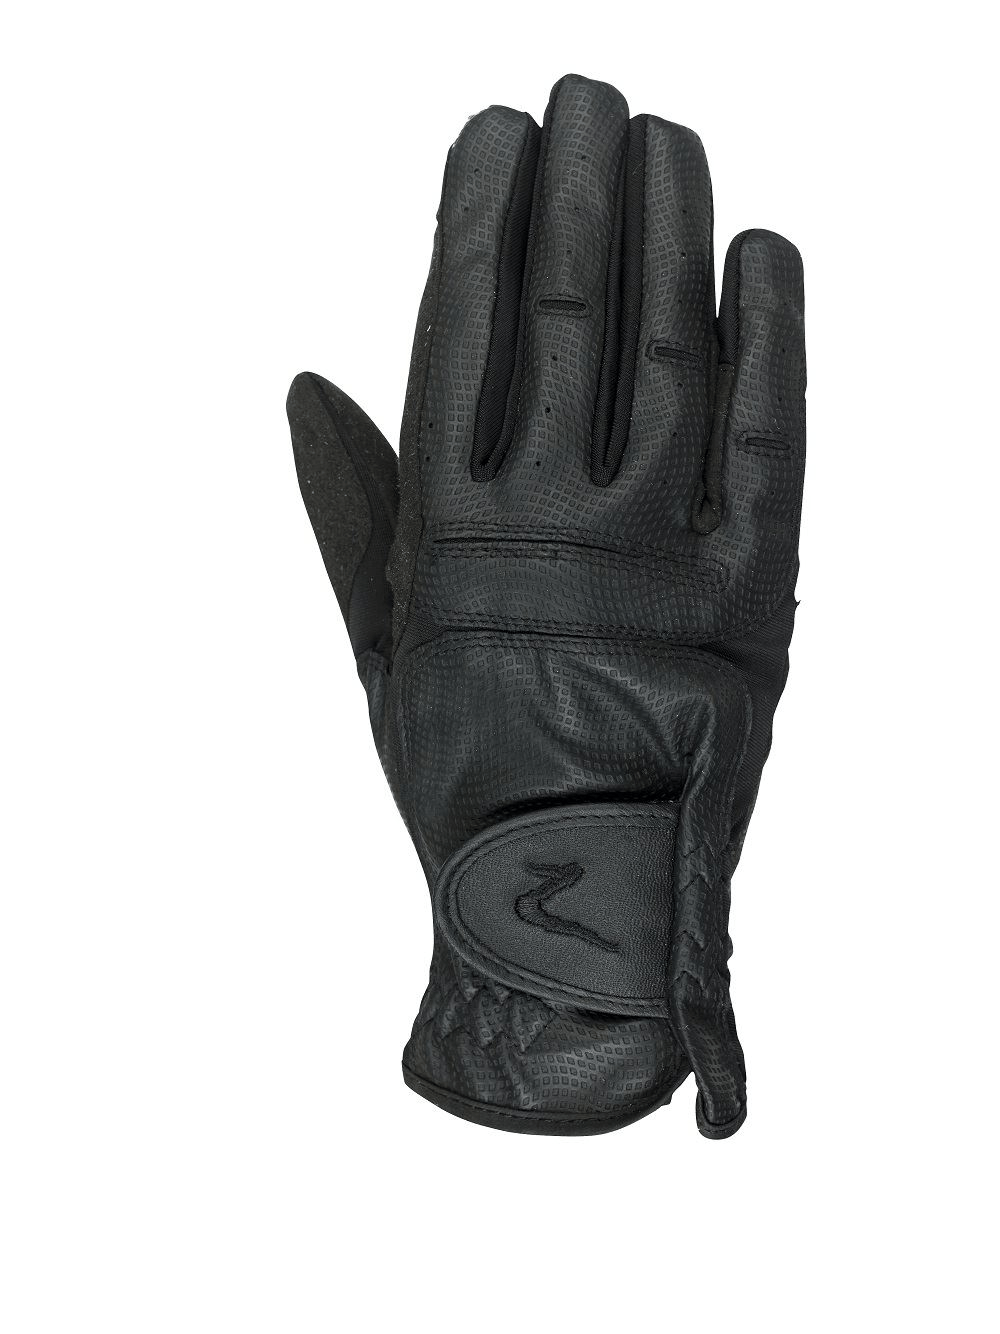 Gympie Saddleworld Gloves L/XL / Black Horze Synthetic Leather Gloves